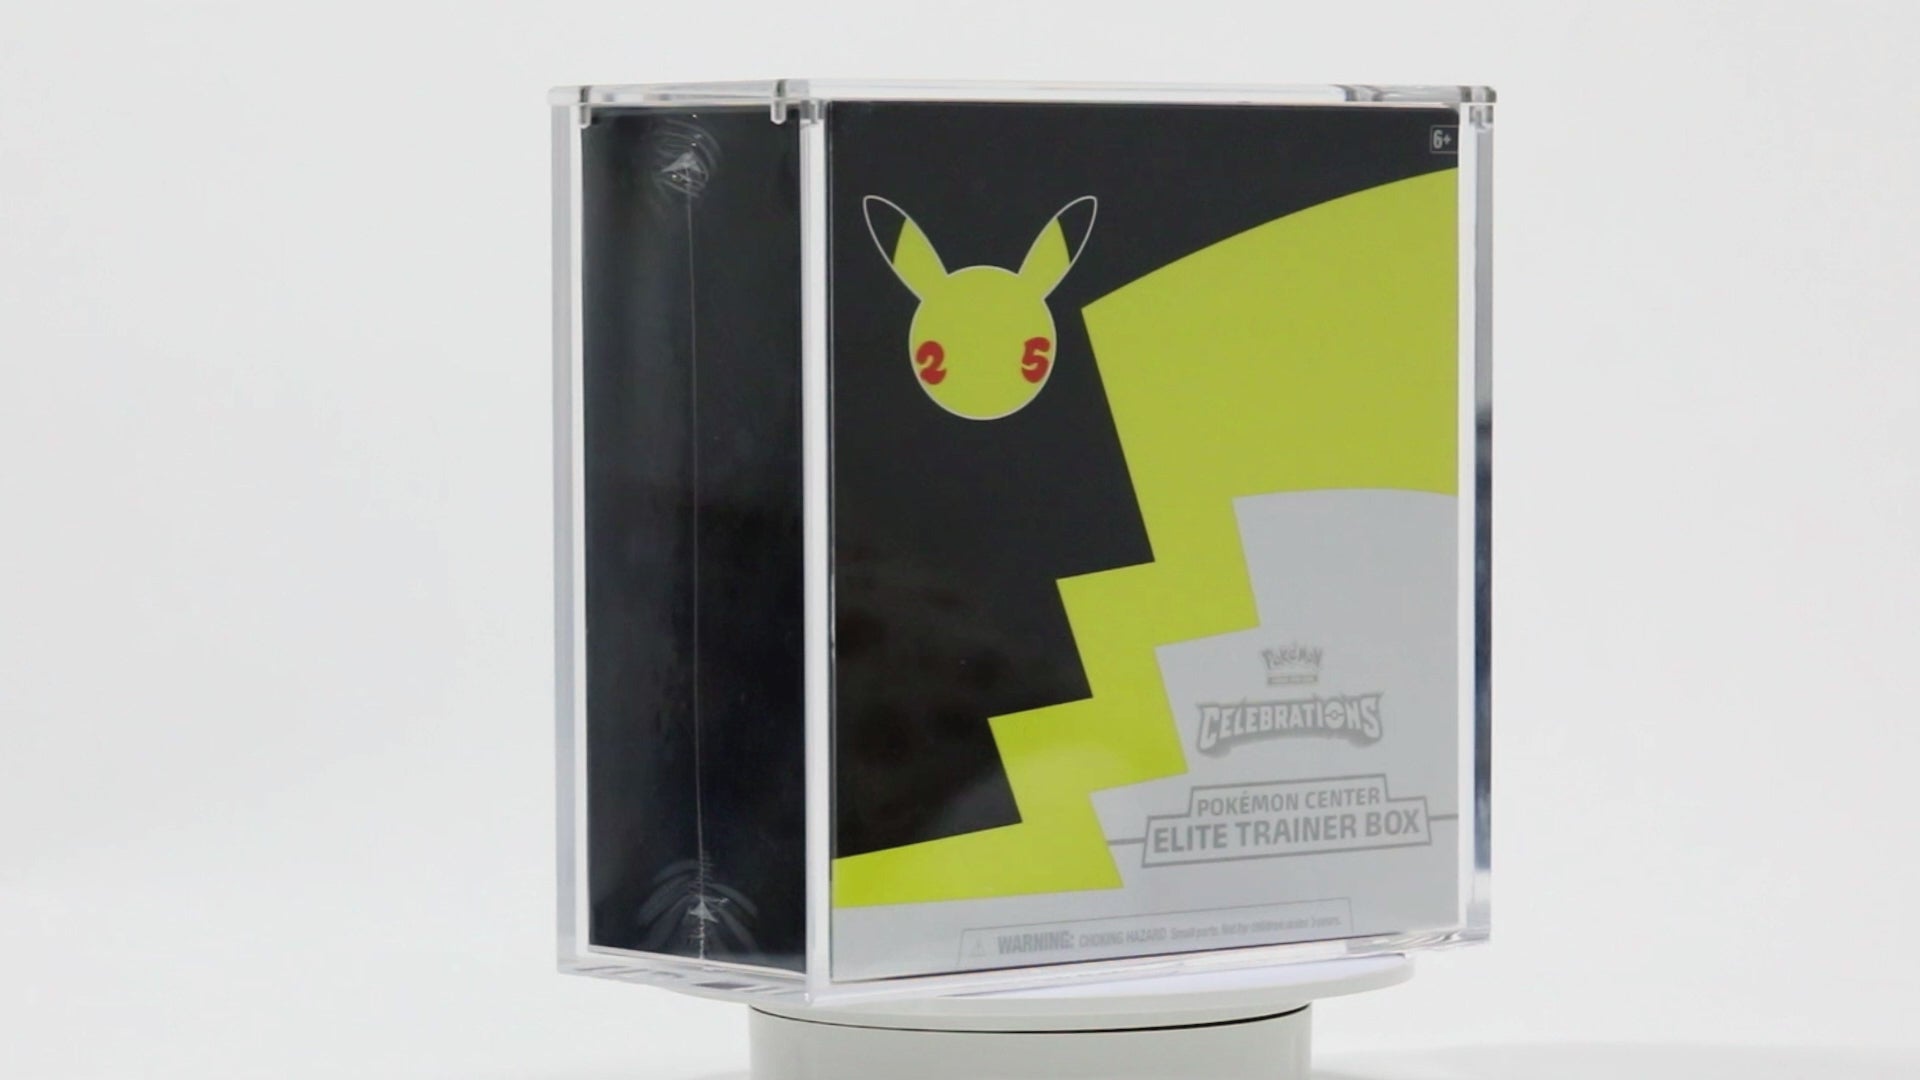 Pokemon Elite Trainer Box Celebrations acryl case video